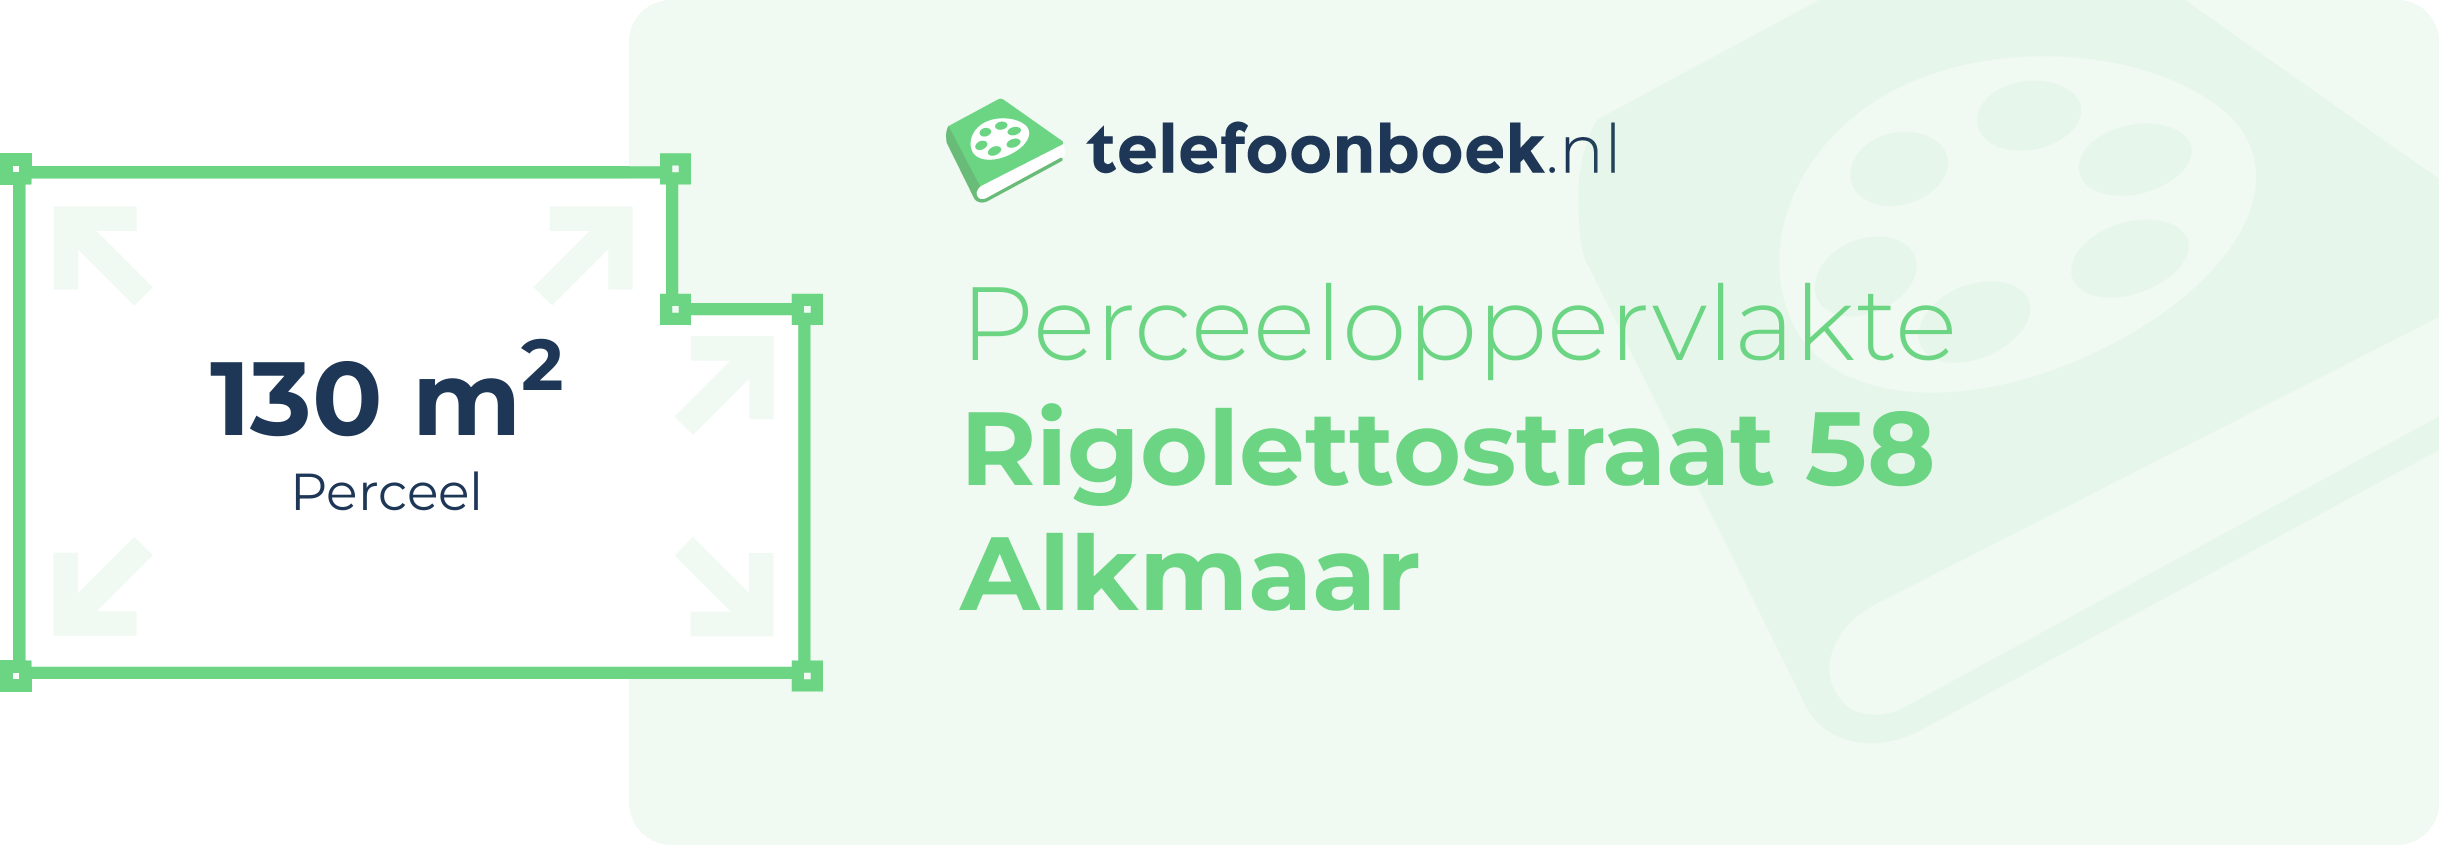 Perceeloppervlakte Rigolettostraat 58 Alkmaar